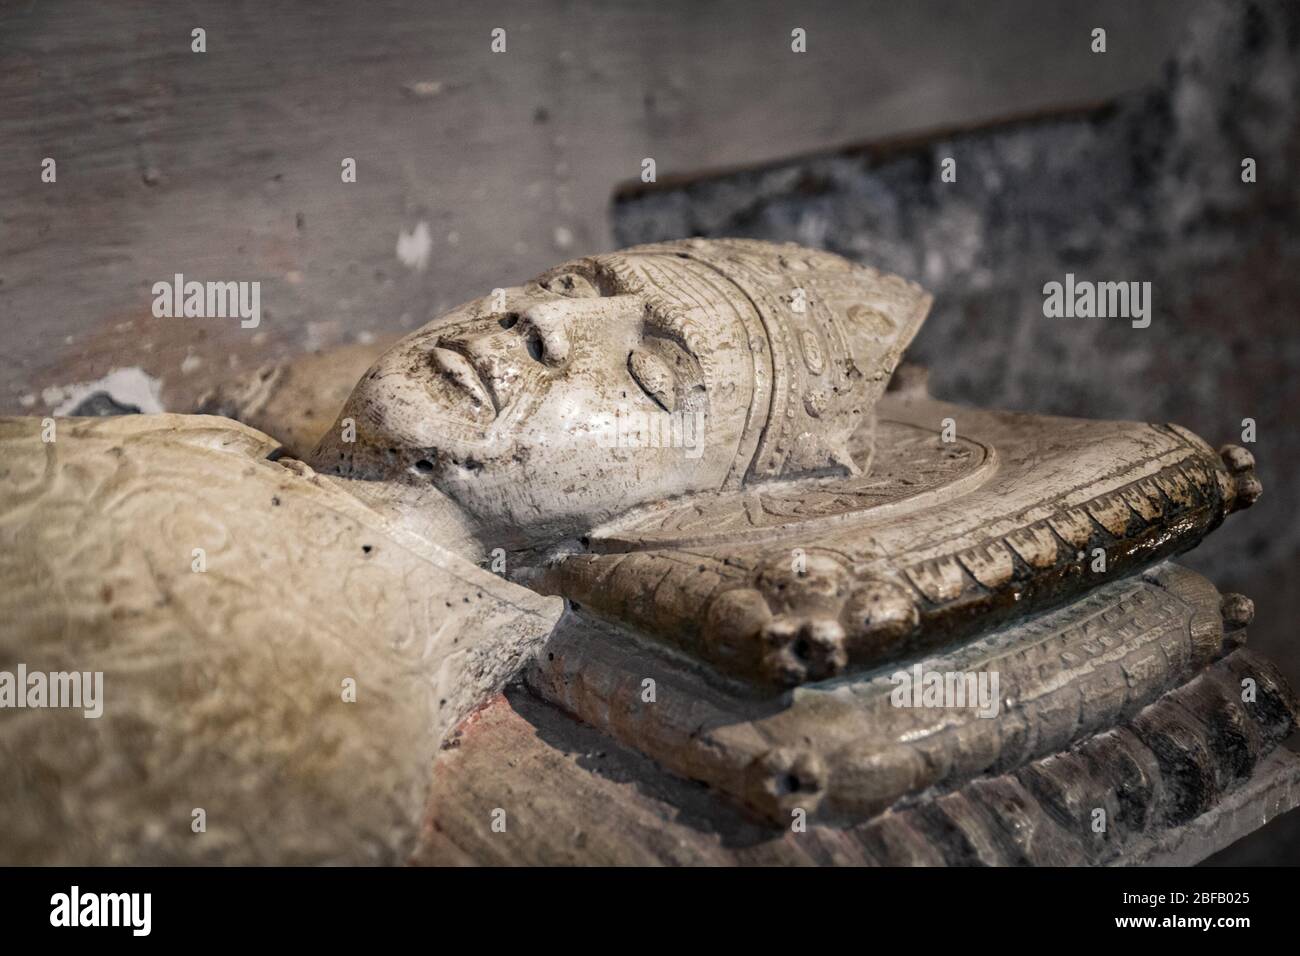 Sovana, Italy - June 25, 2017: The 15th century travertine sarcophagus that originally housed the remains of San Mamiliano. Tomb of San Mamiliano. Stock Photo